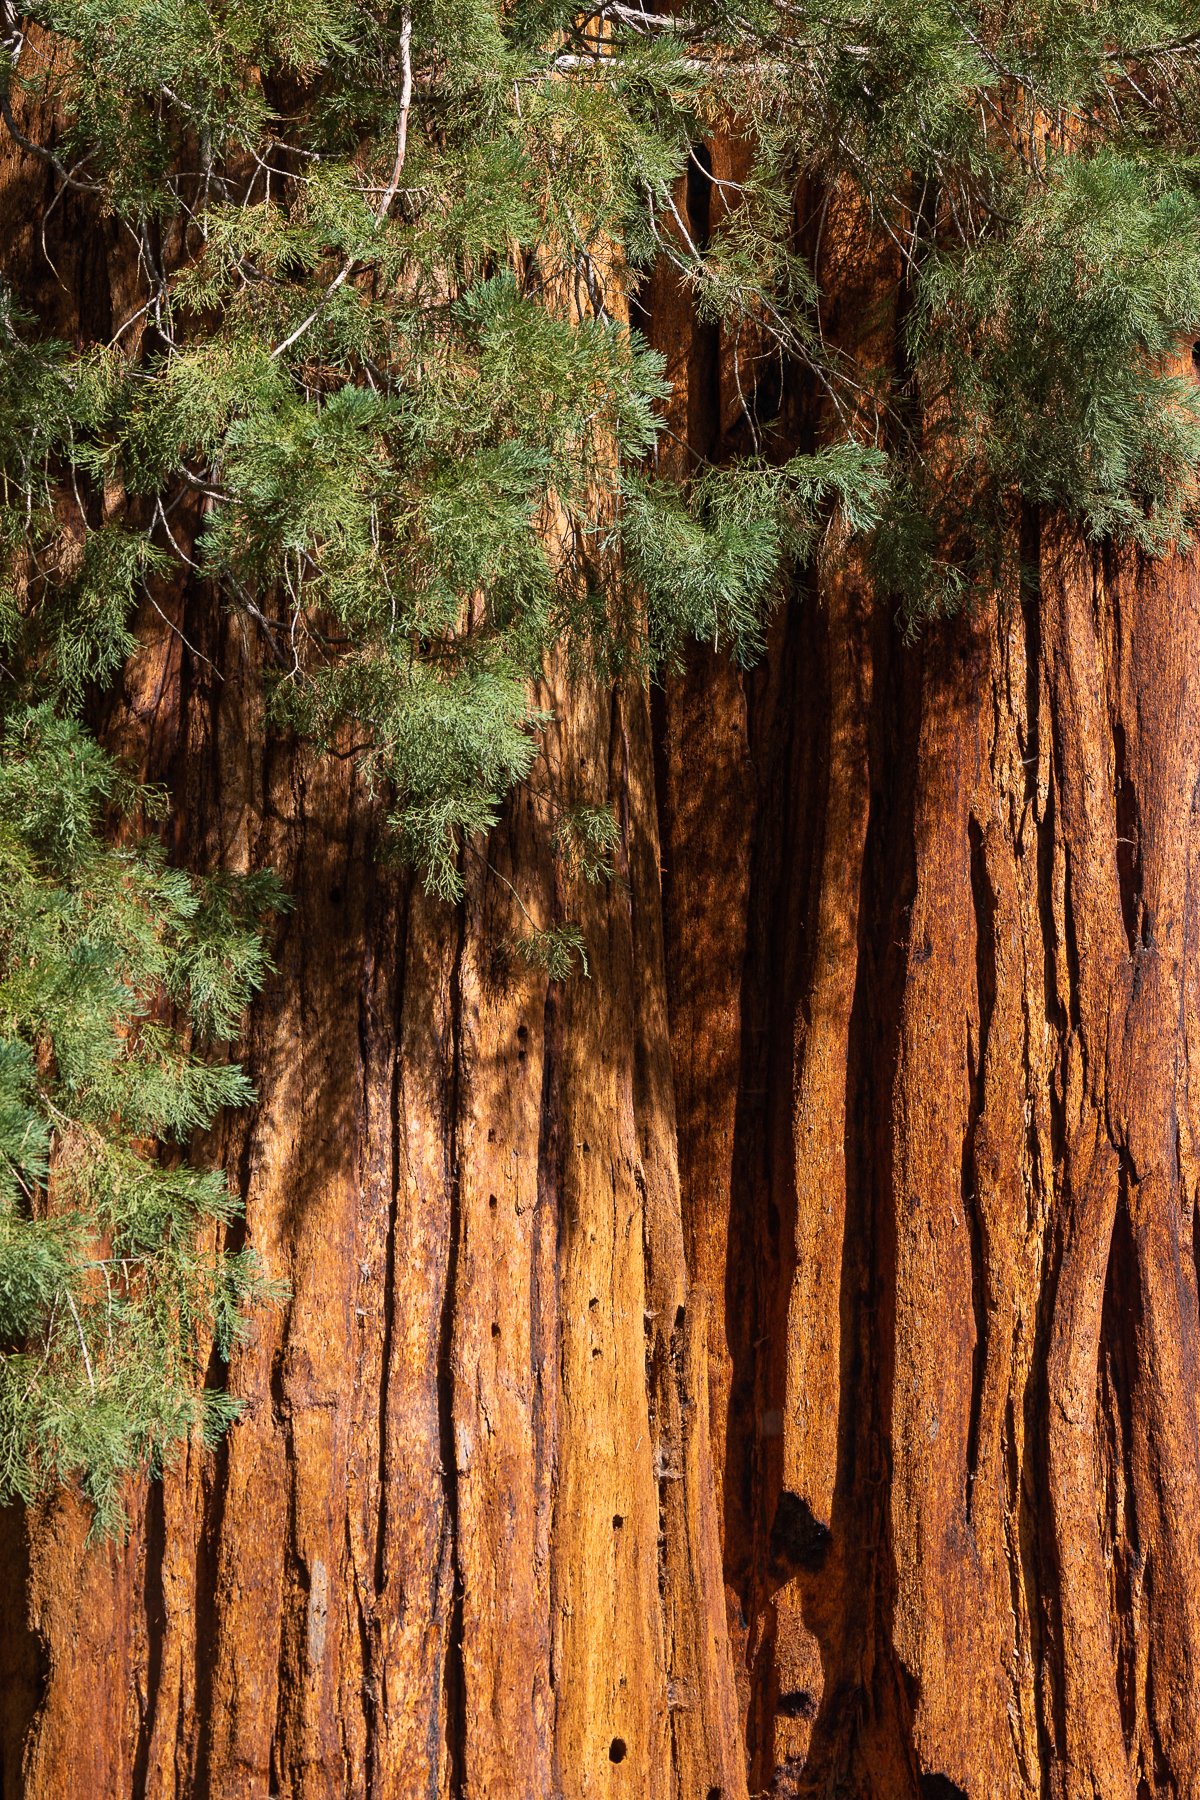 sequoia-tree-trunk-detail-leaves-conifer-coniferous-orange-bark-green-national-park-parks-photography-photographer.jpg